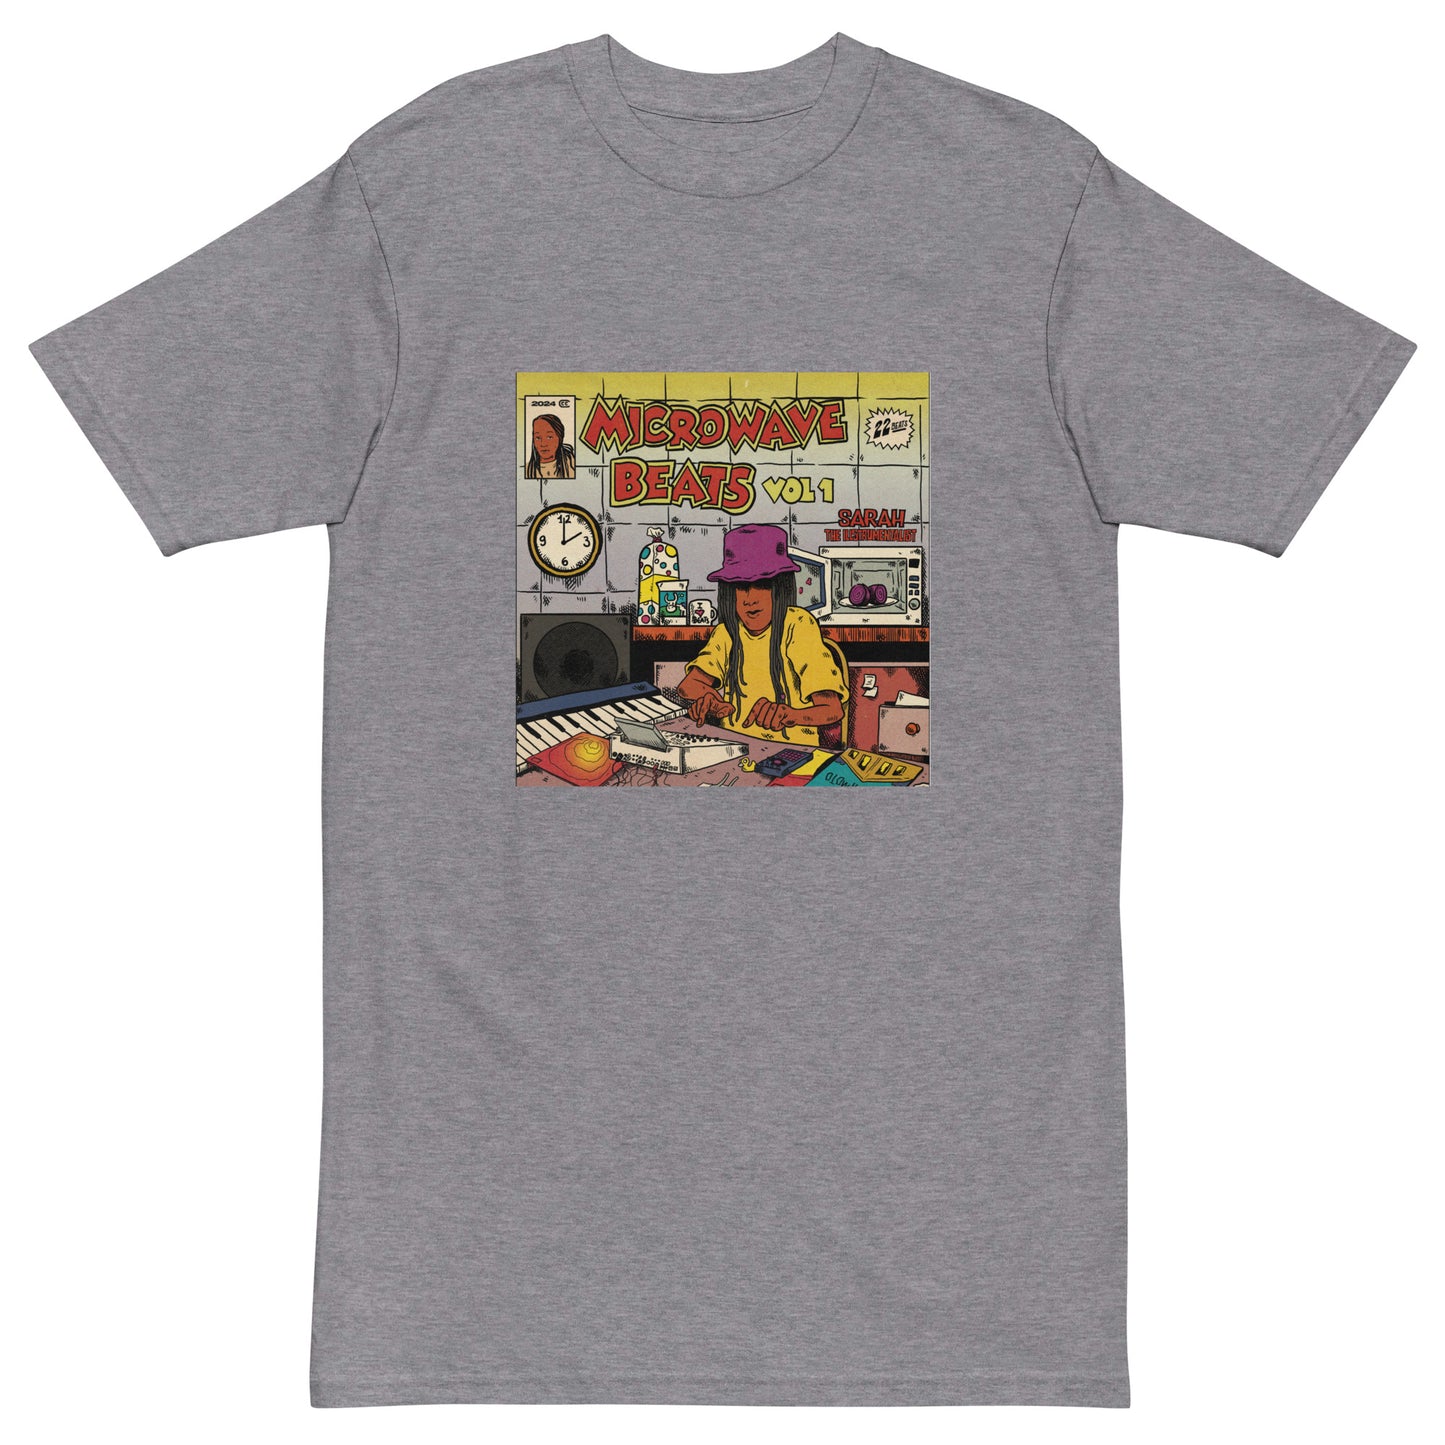 Microwave Beats Vol. 1 T-shirt